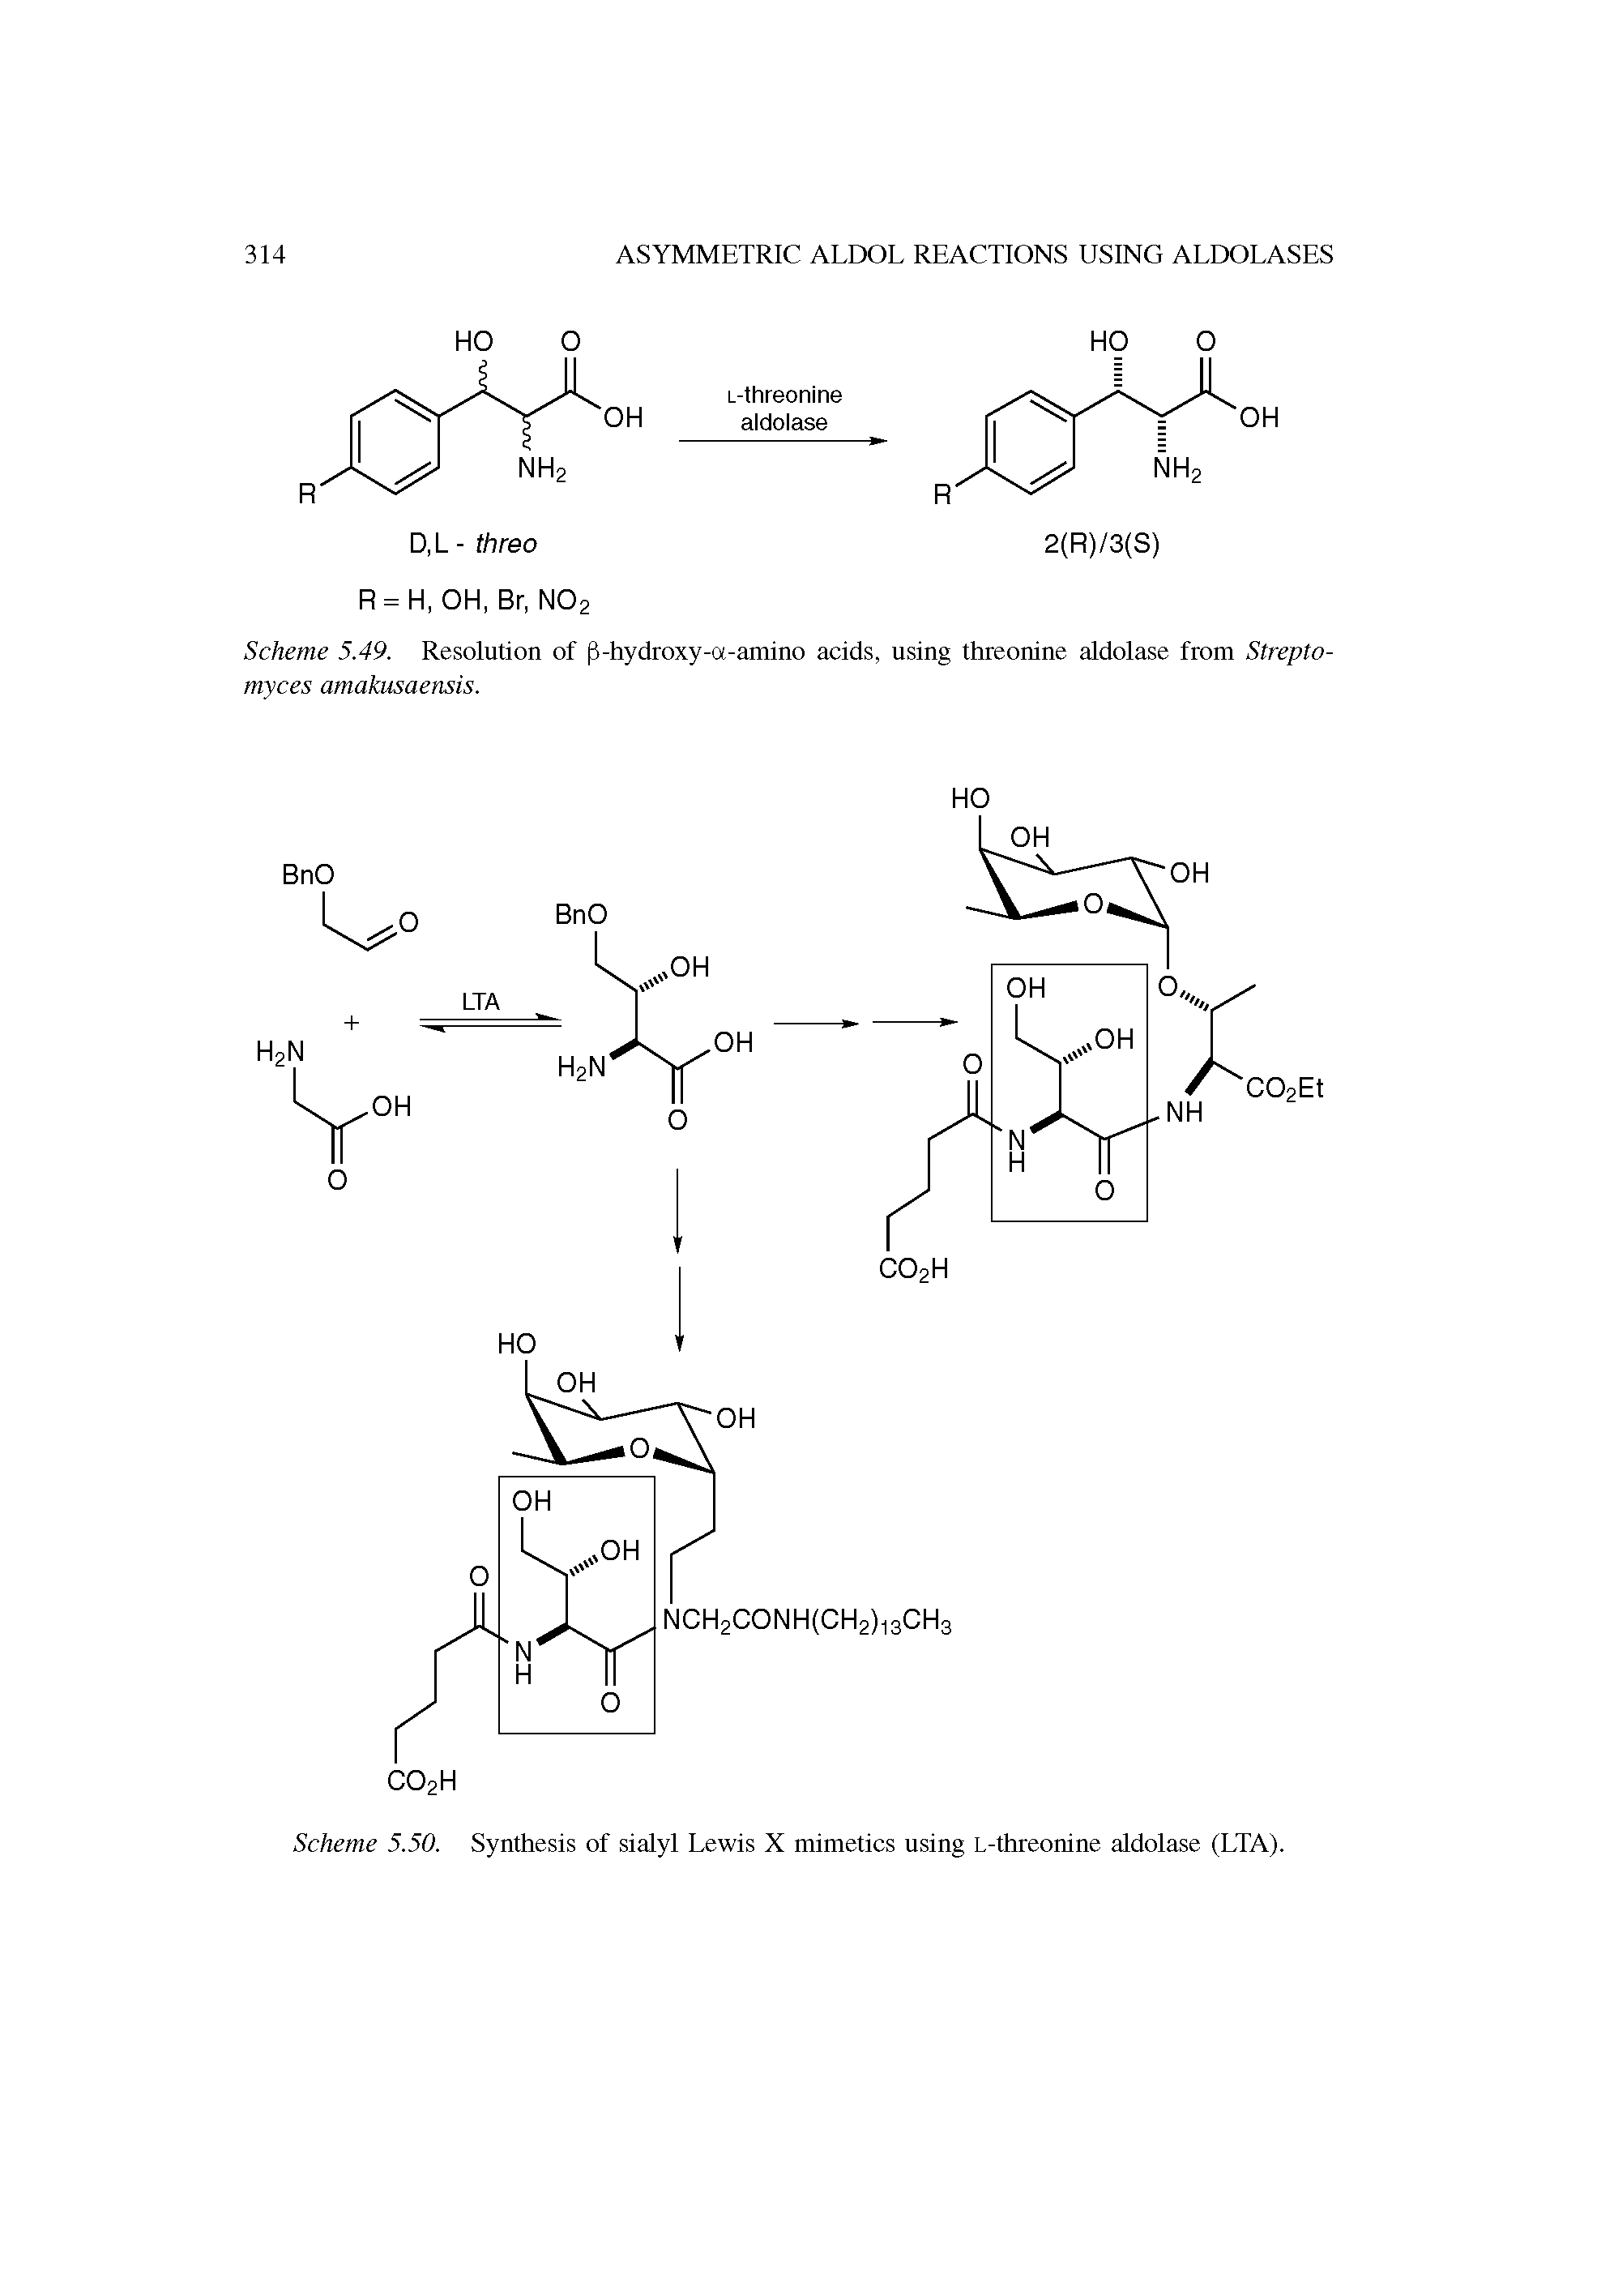 Scheme 5.49. Resolution of fi-hydroxy-a-amino acids, using threonine aldolase from Strepto-myces amakusaensis.